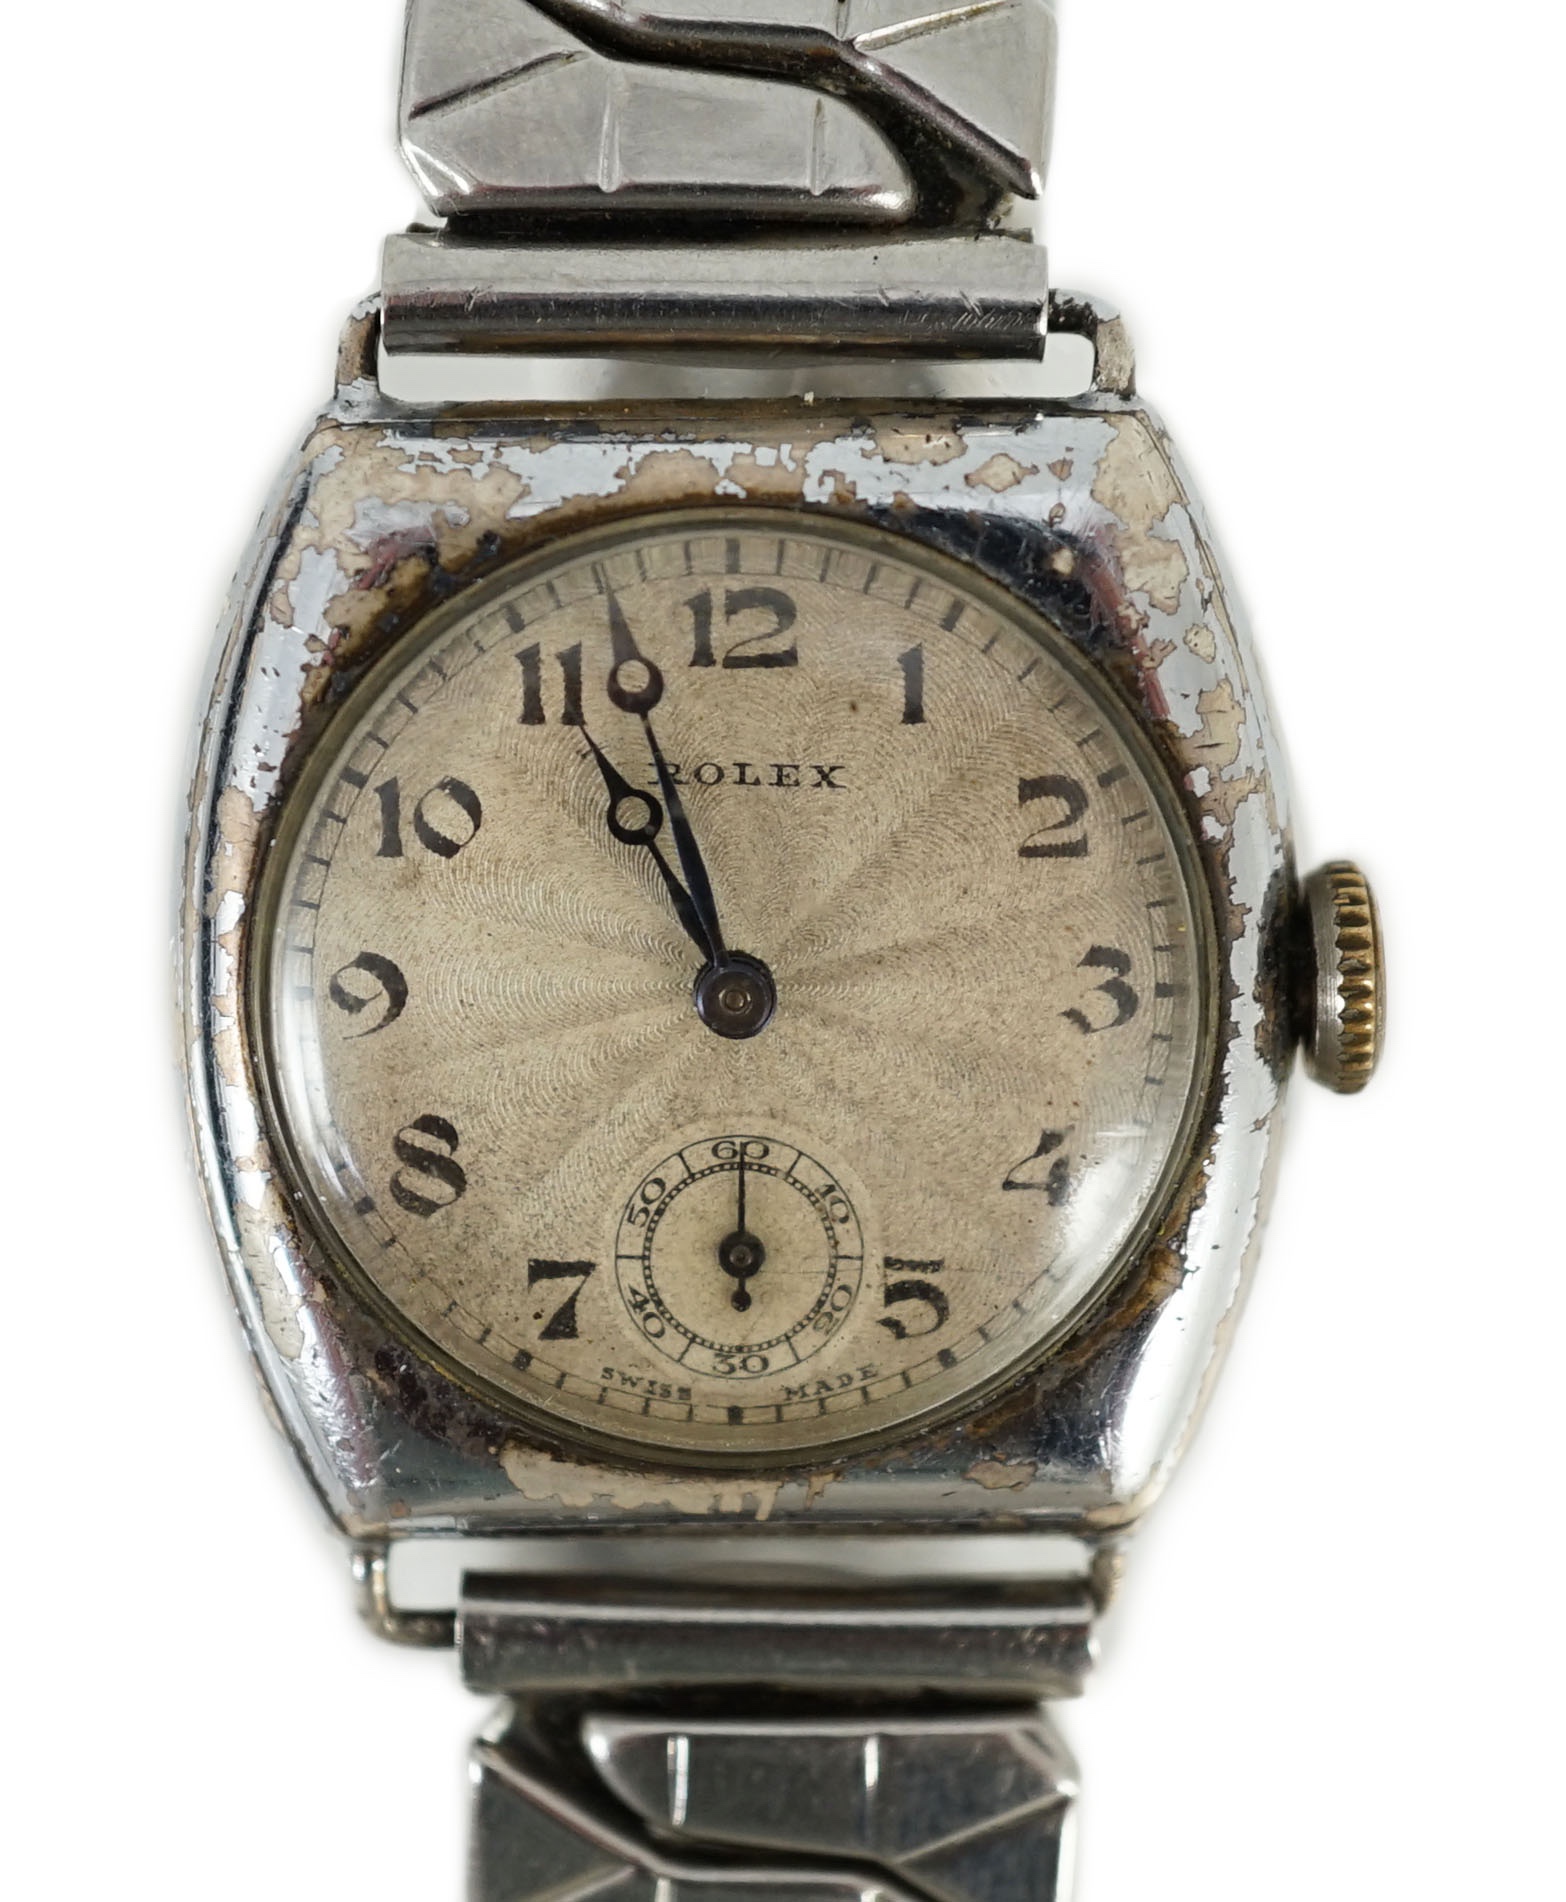 A gentleman's late 1920's silver cushion cased Rolex manual wind wrist watch